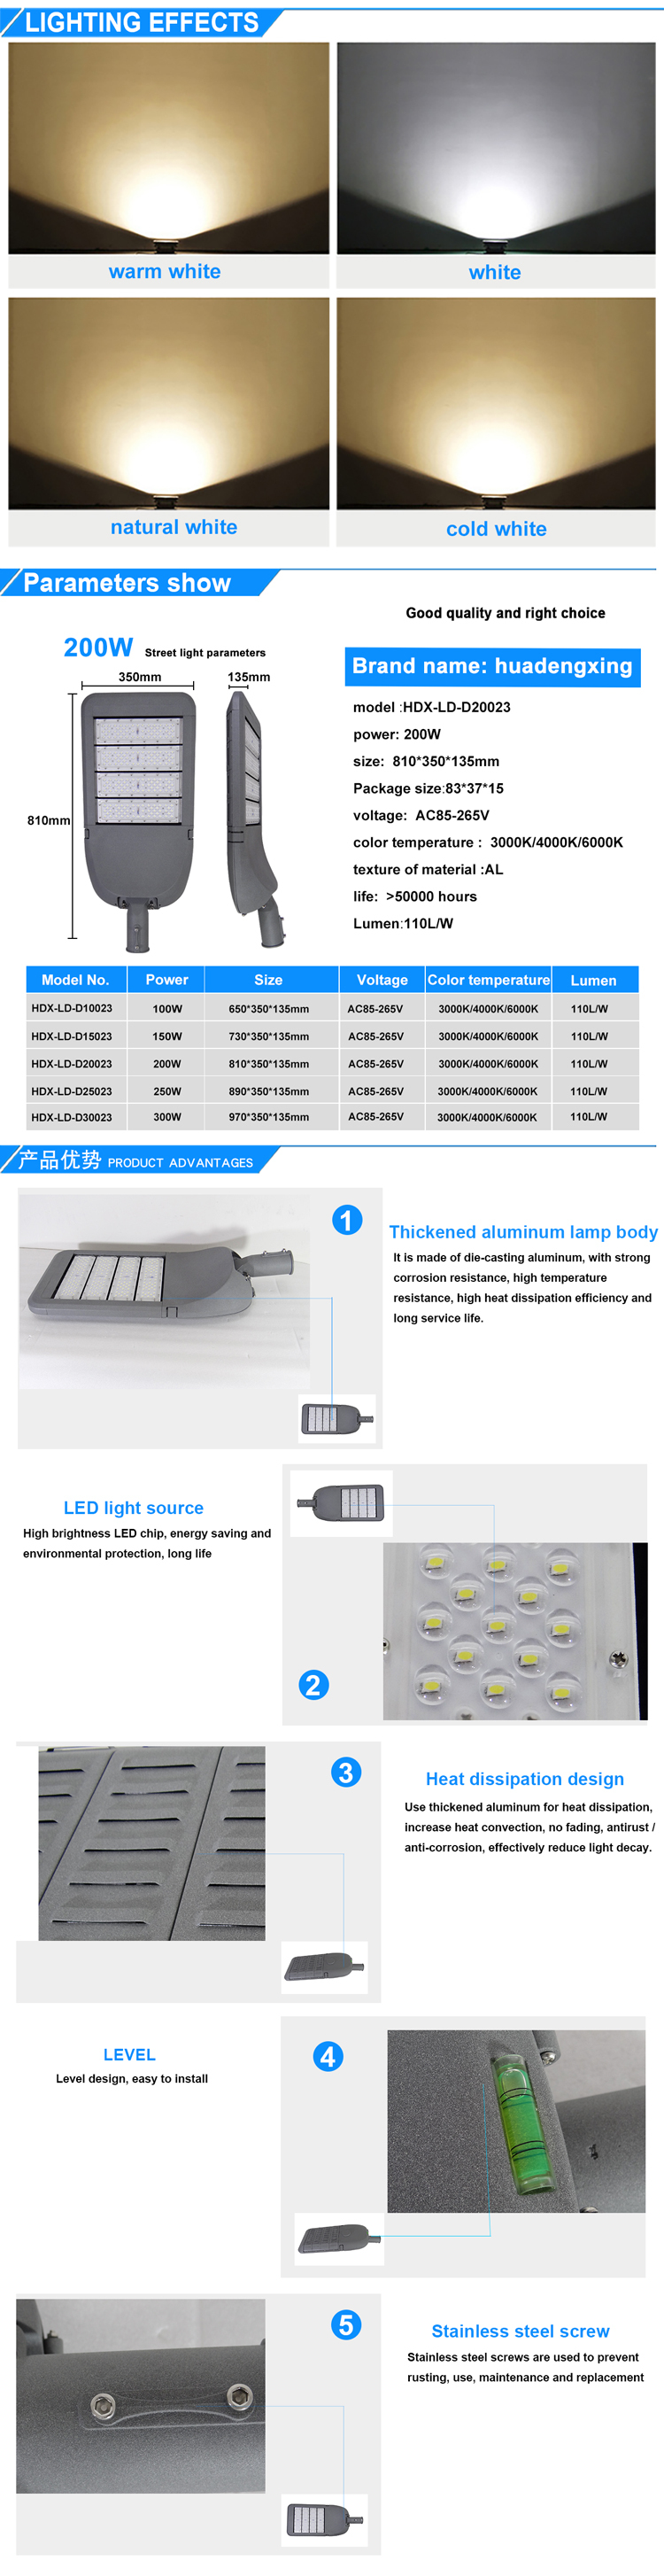 China manufacturer High quality ODM/OEM Reasonable price 110/W Lumen IP65 Waterproof 200W outdoor lighting LED module street lamp